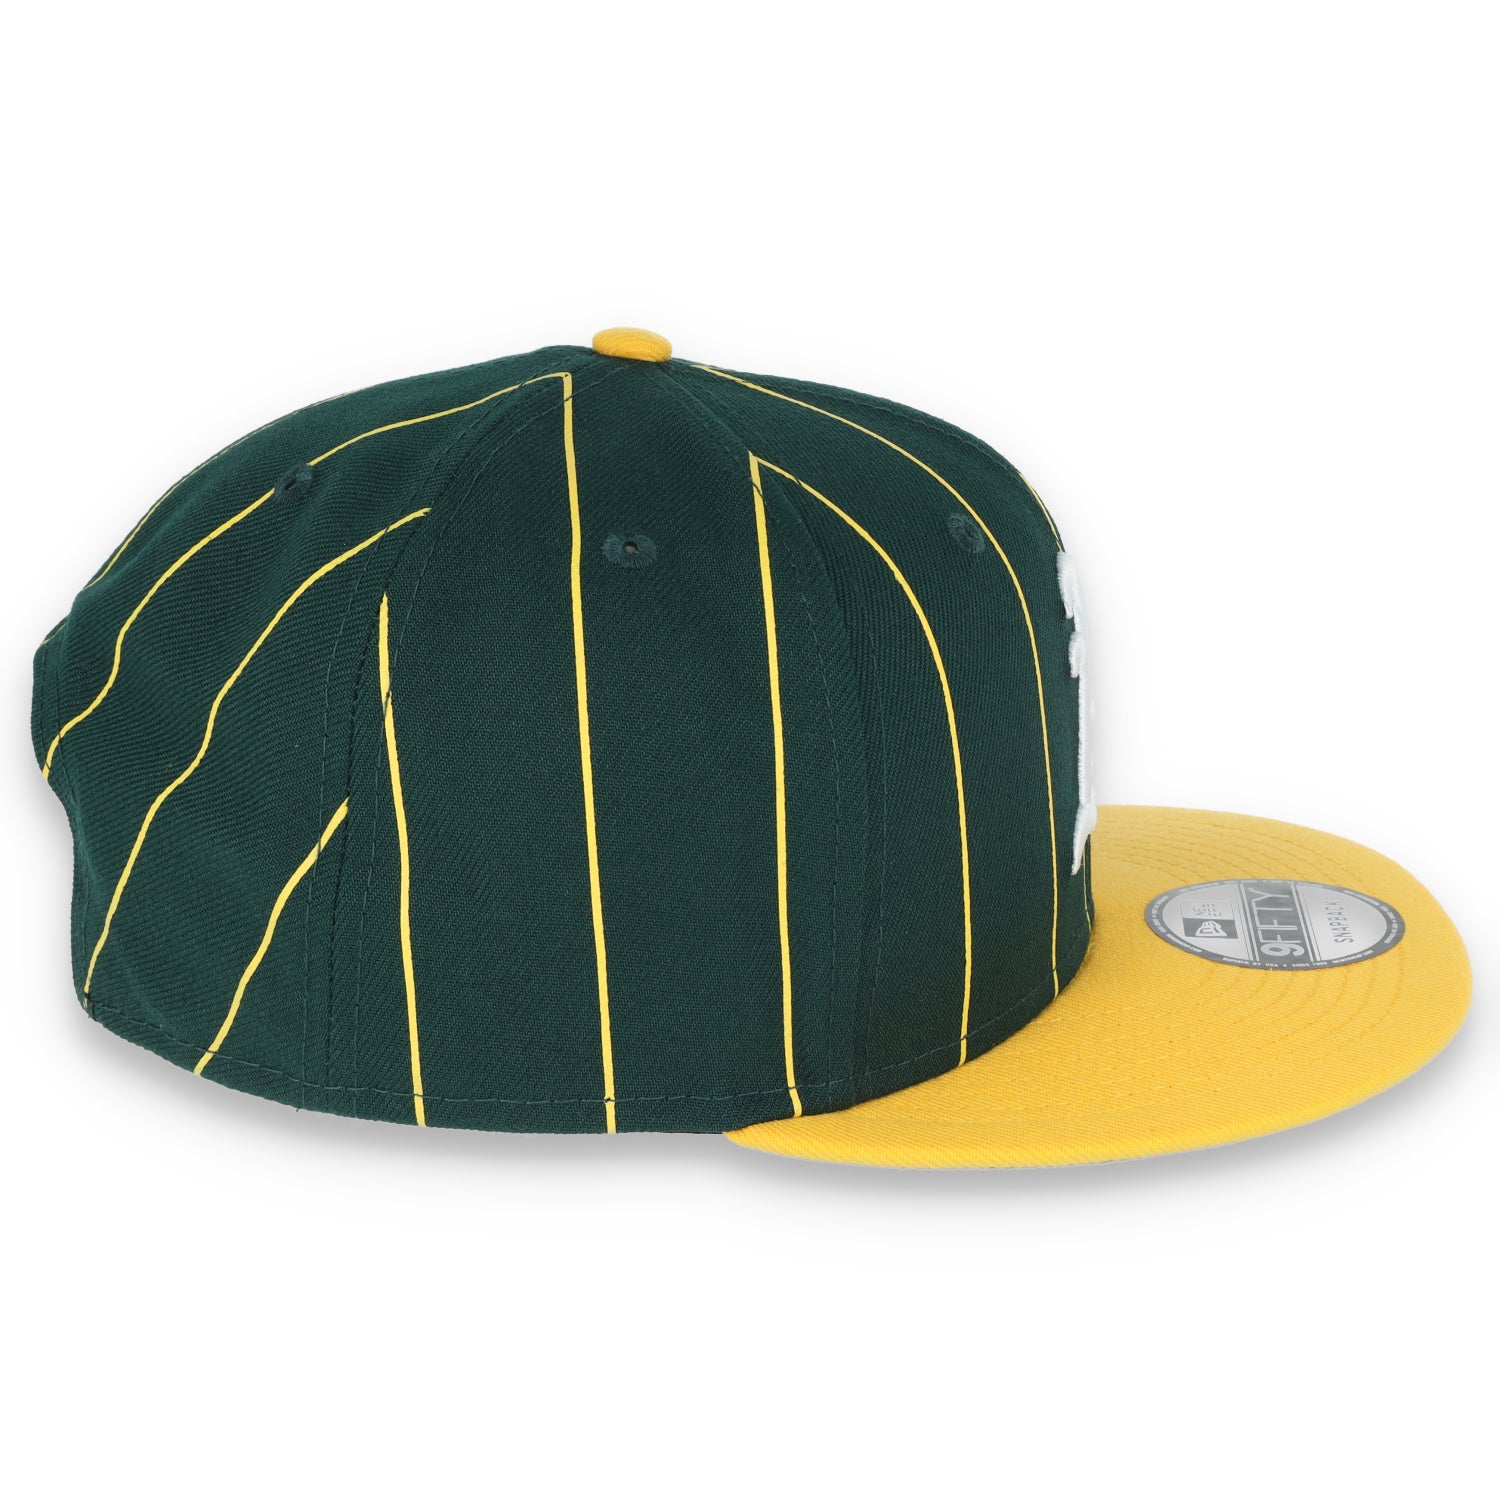 New Era Oakland Athletics Vintage Throwback 9Fifty Snapback Hat-Green